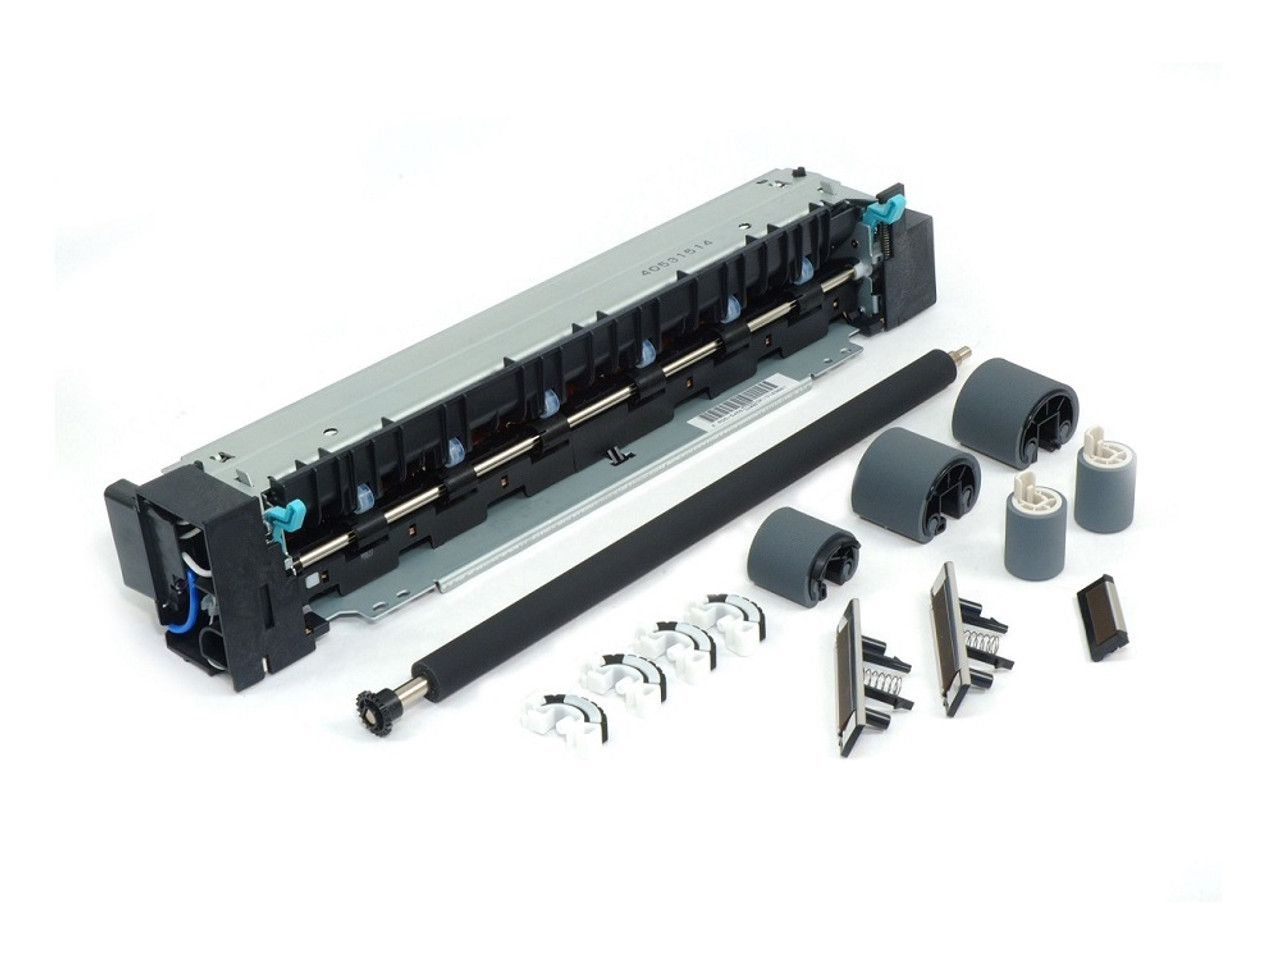 Part No:C3914-69001 -HP Maintenance Kit (110V) for LaserJet 8100 / 8150 Series Printer